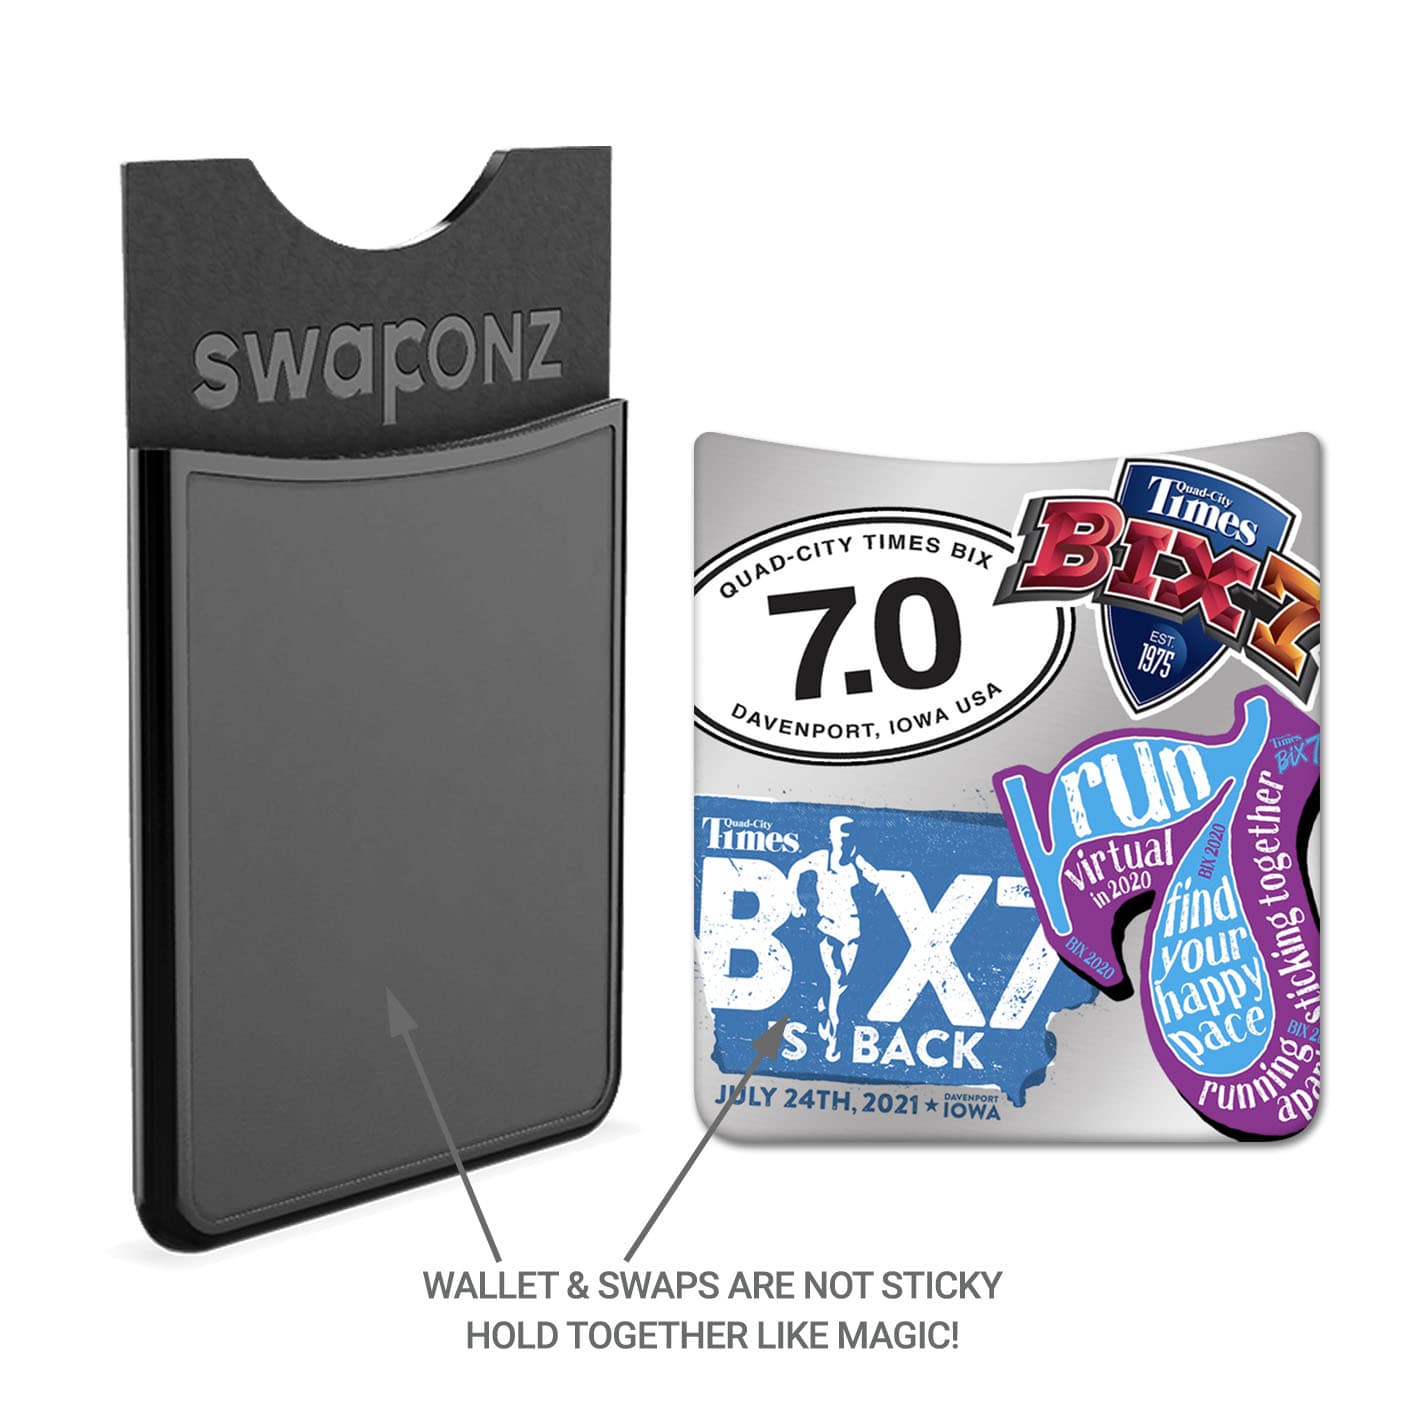 Phone Wallet Set - BIX 7 - 3